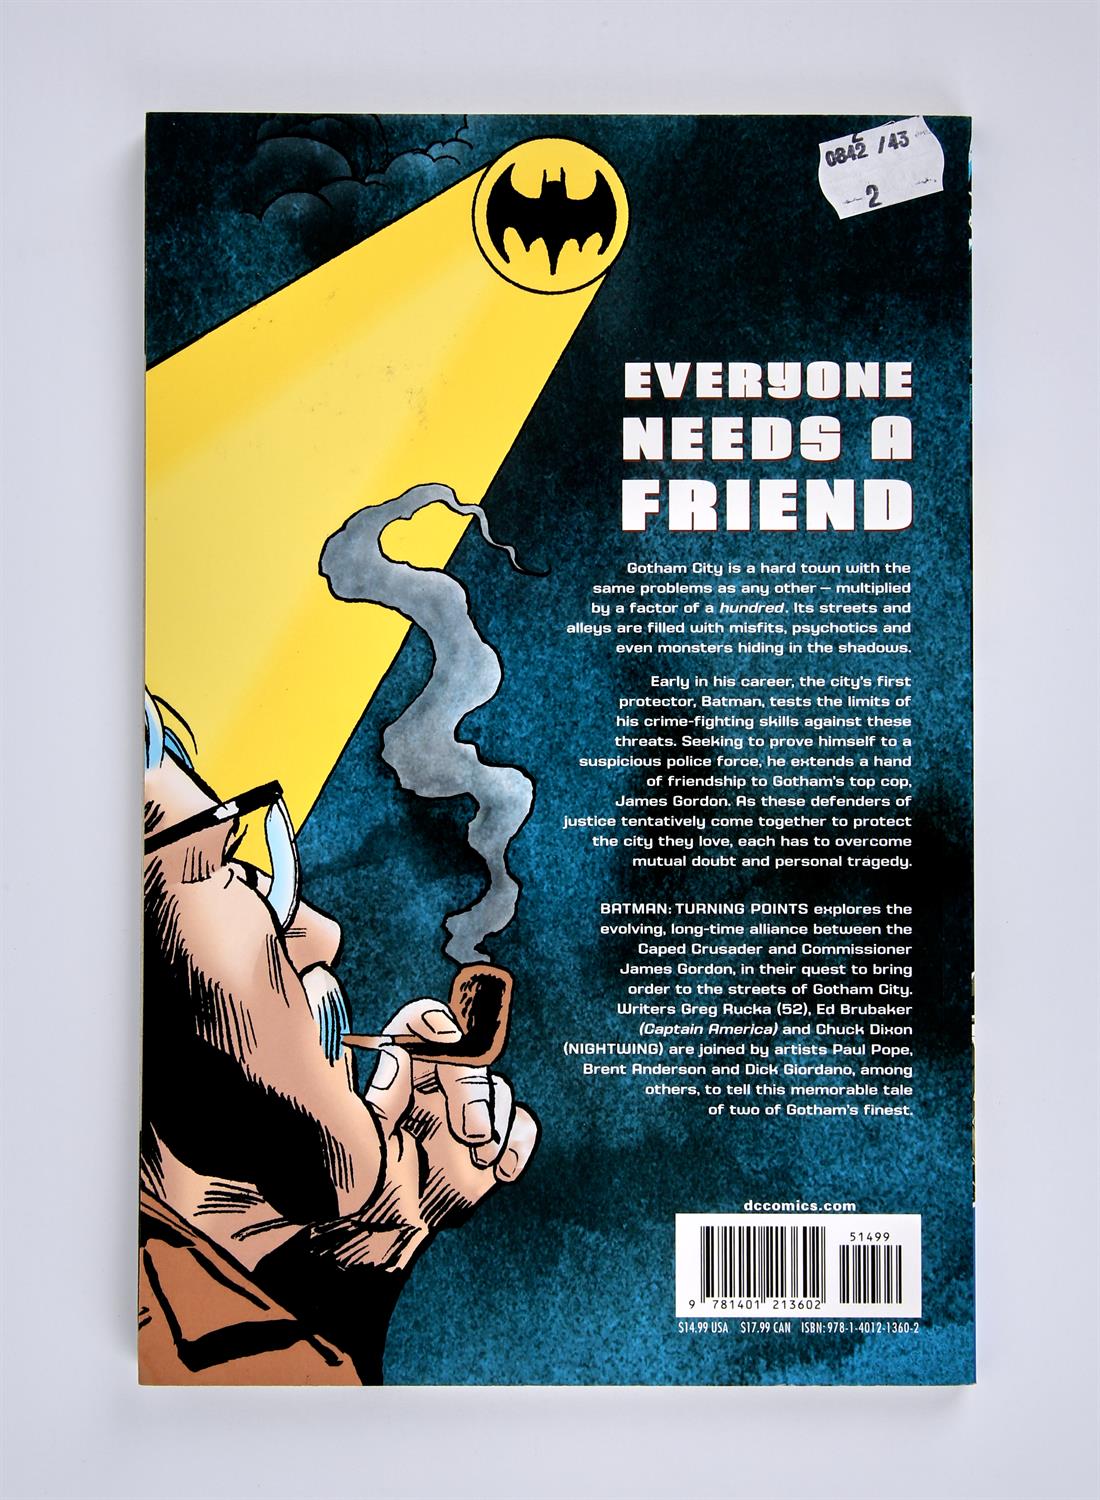 Batman ‘Turning Points’ Graphic Novel Signed by Adam West (Batman) Burt Ward (Robin) and Tim Sale. - Image 2 of 2